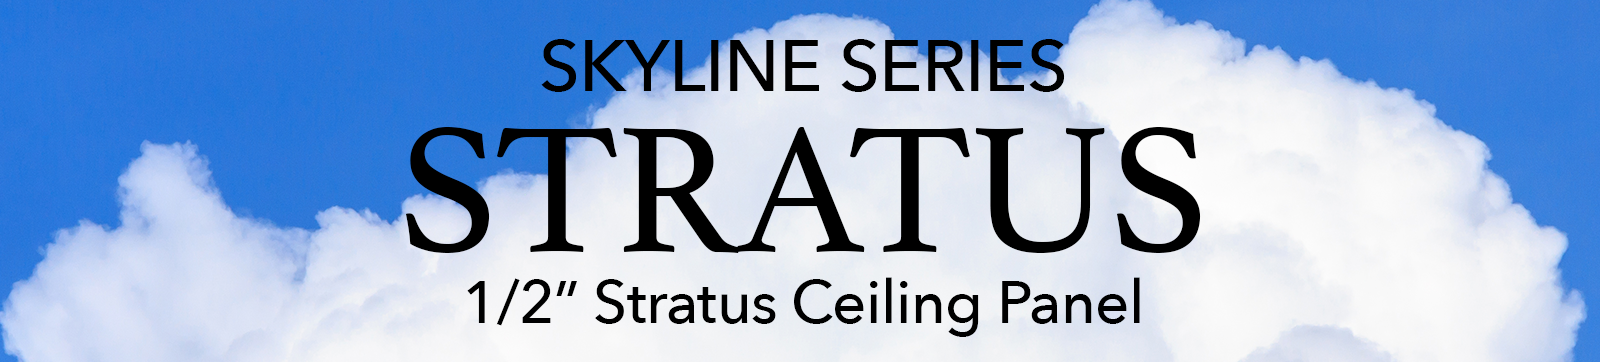 Spantek 1/2" Stratus Ceiling Panel Cloud Background